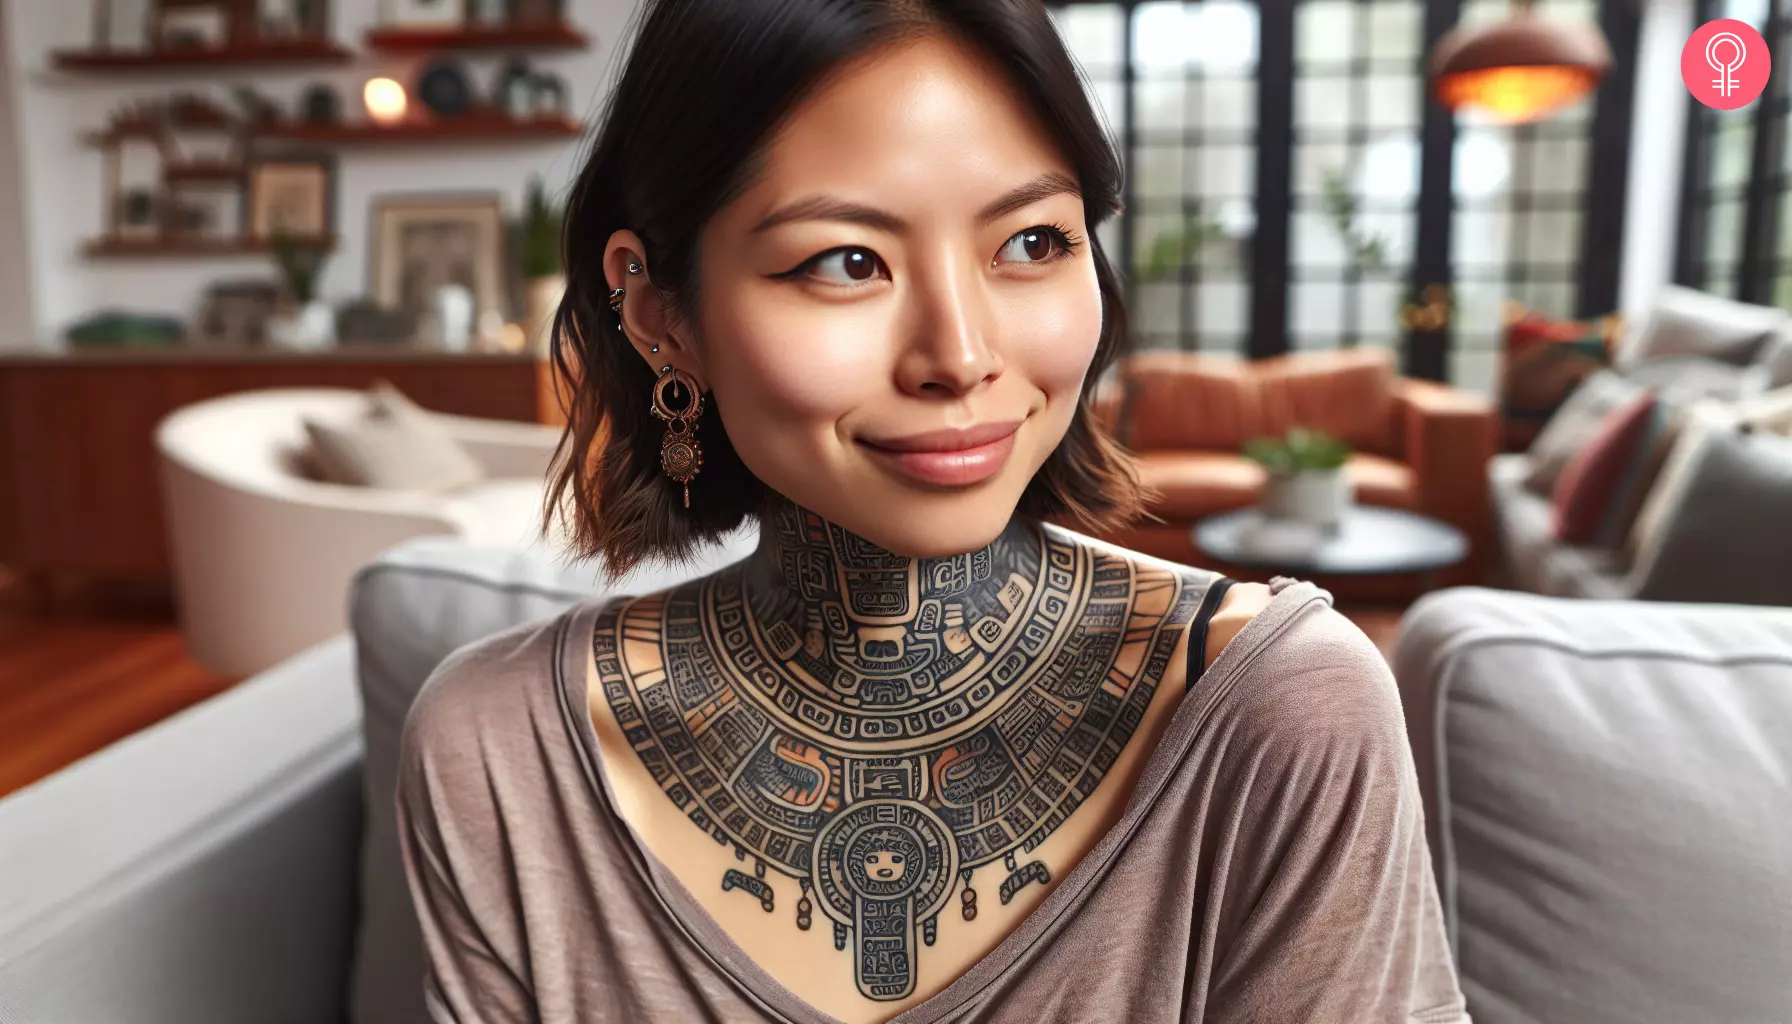 A Mayan necklace tattoo